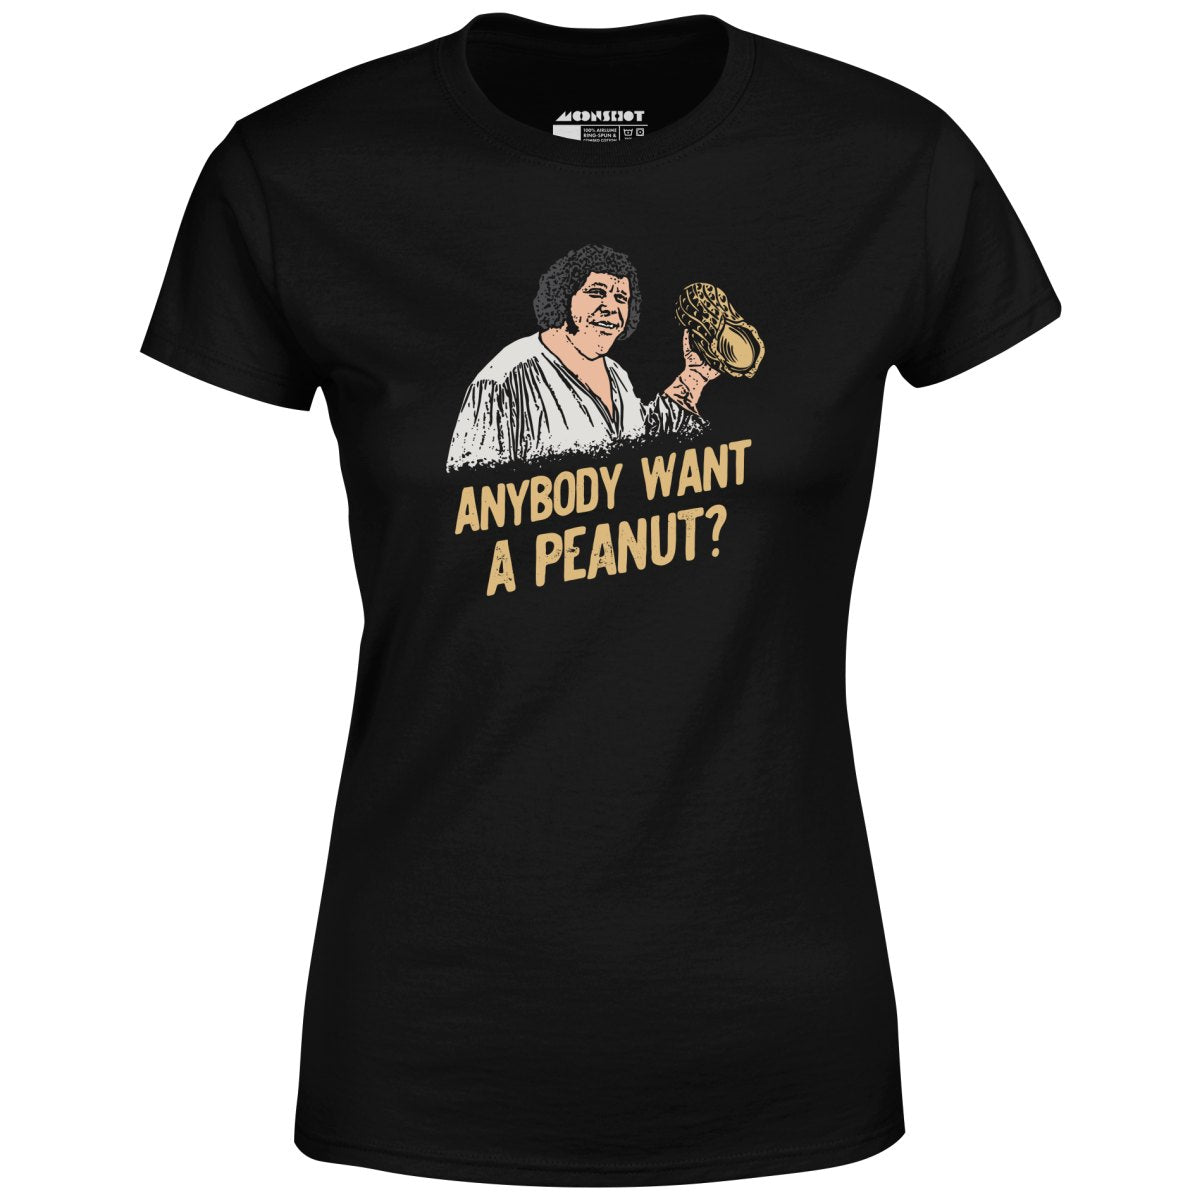 Anybody Want a Peanut? - Women's T-Shirt